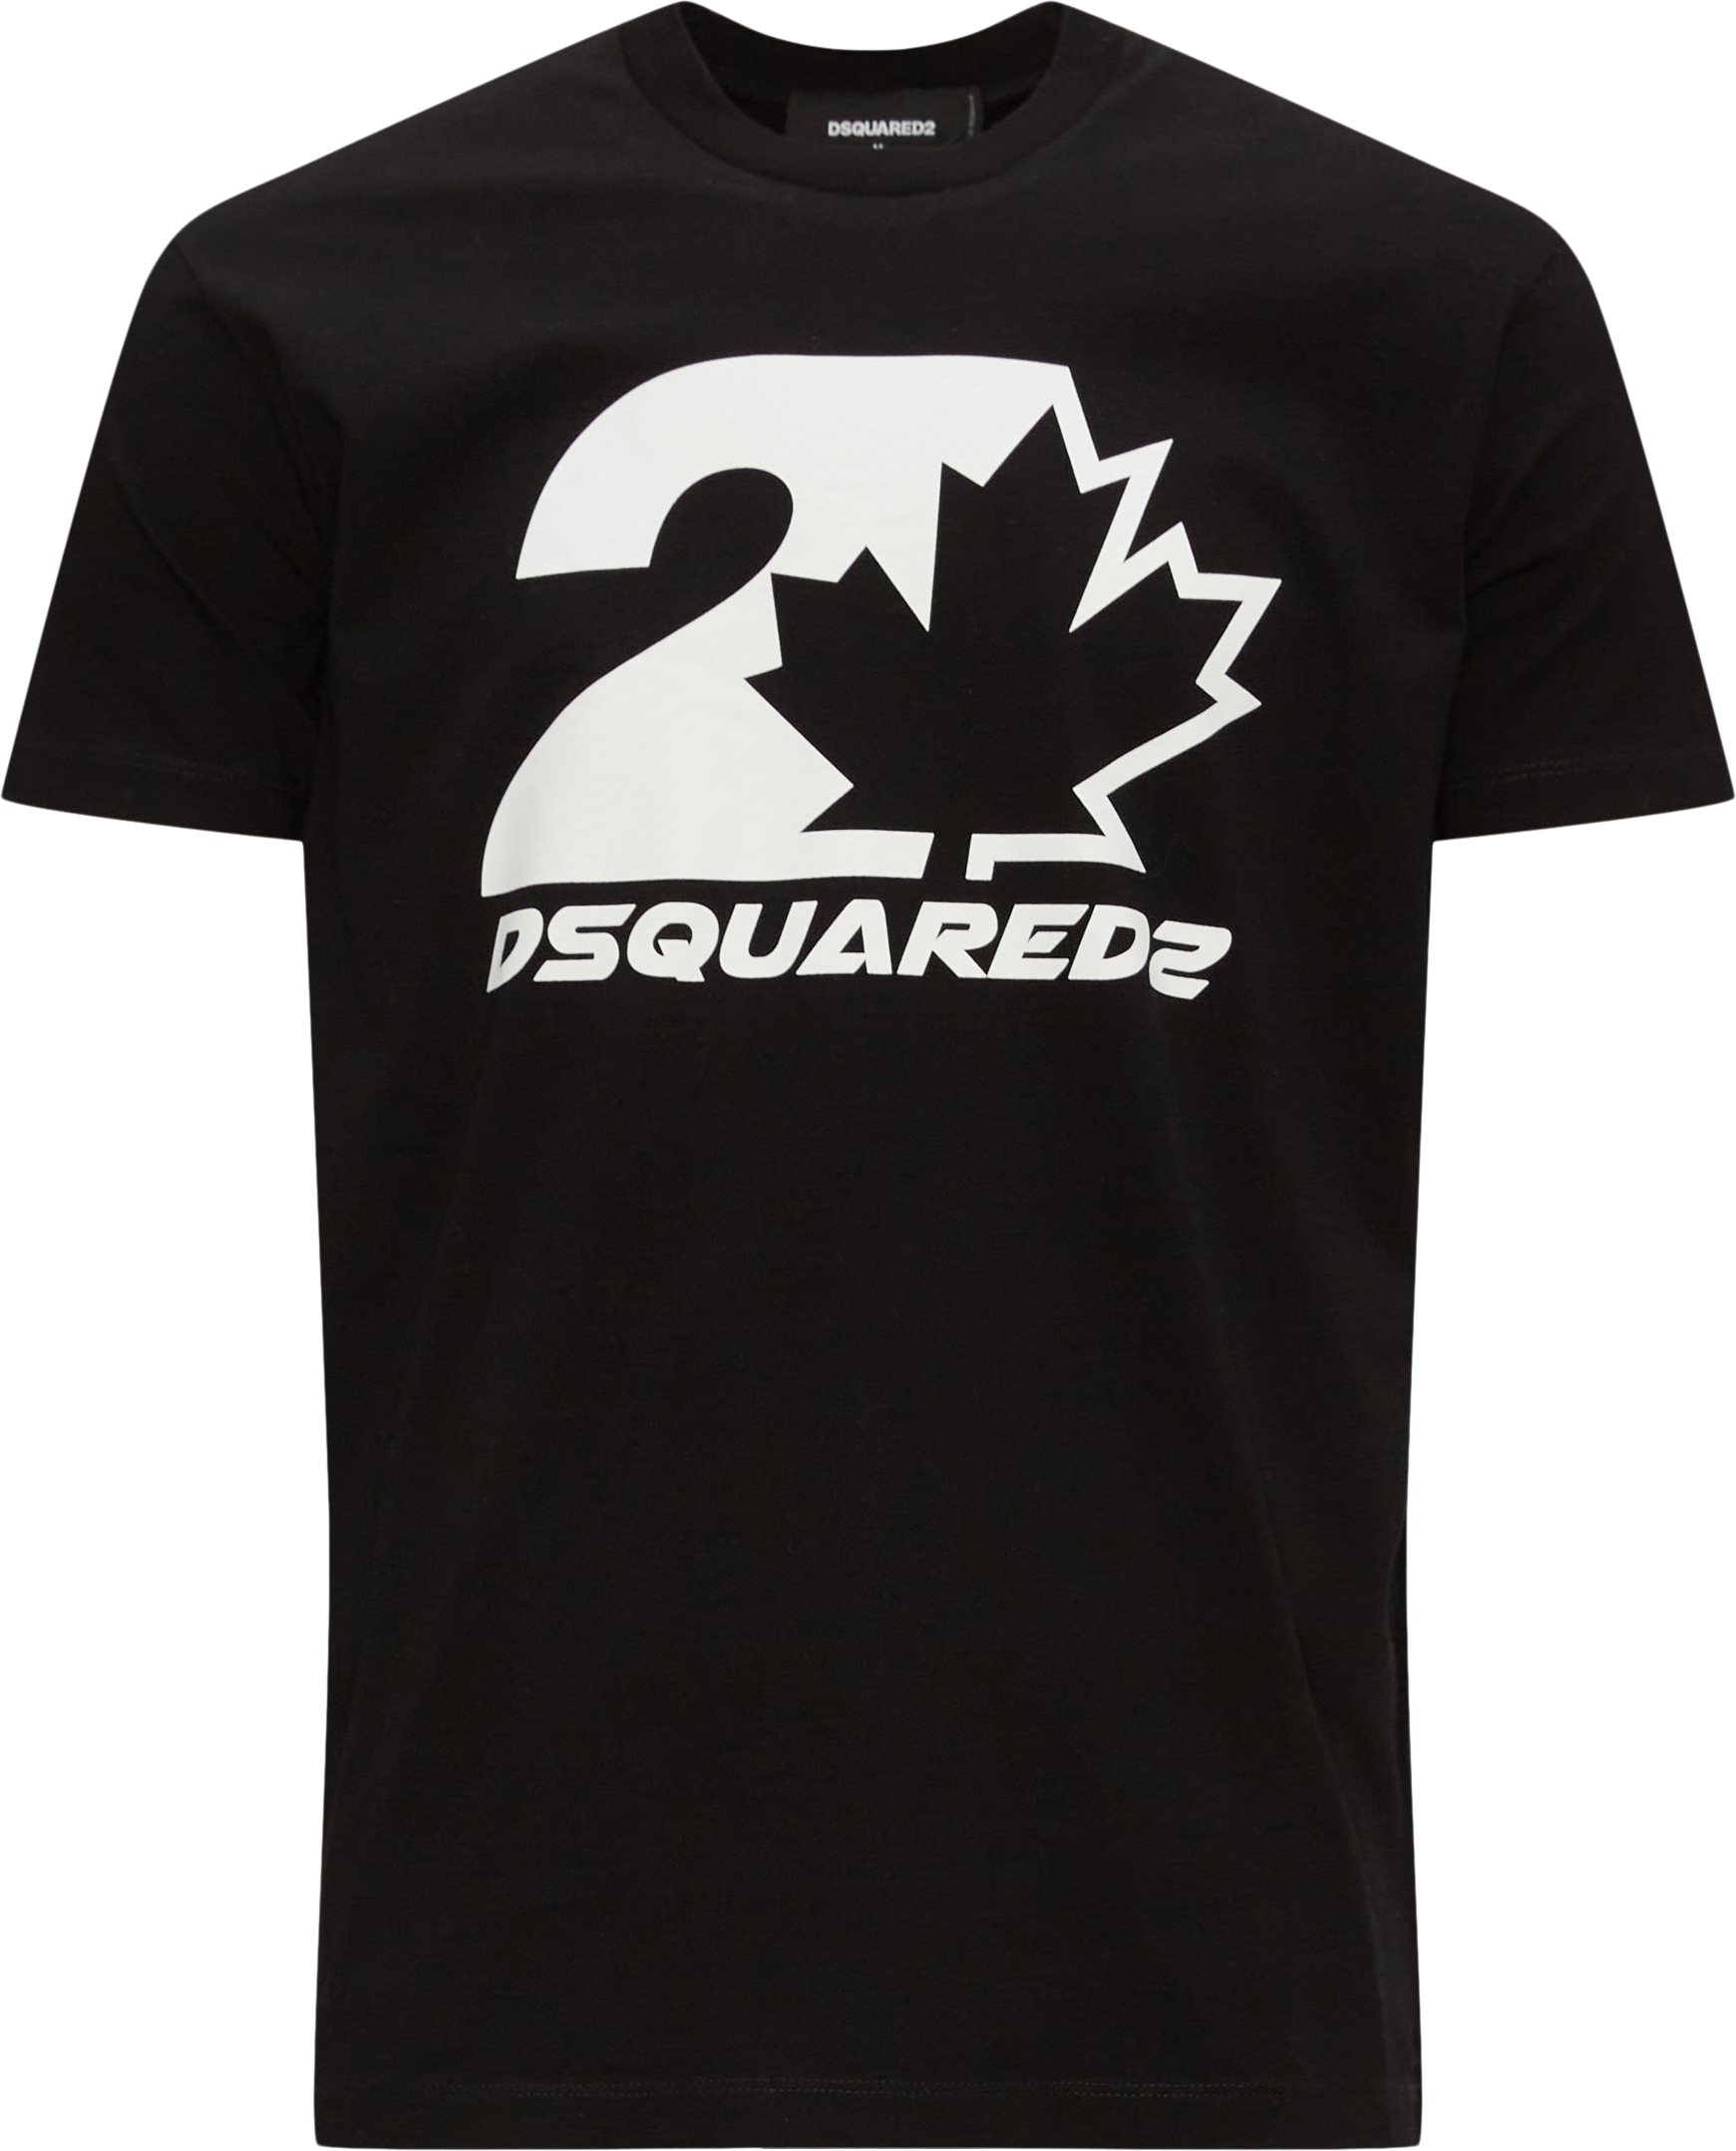 Dsquared2 T-shirts S74GD1157 S23009 Black